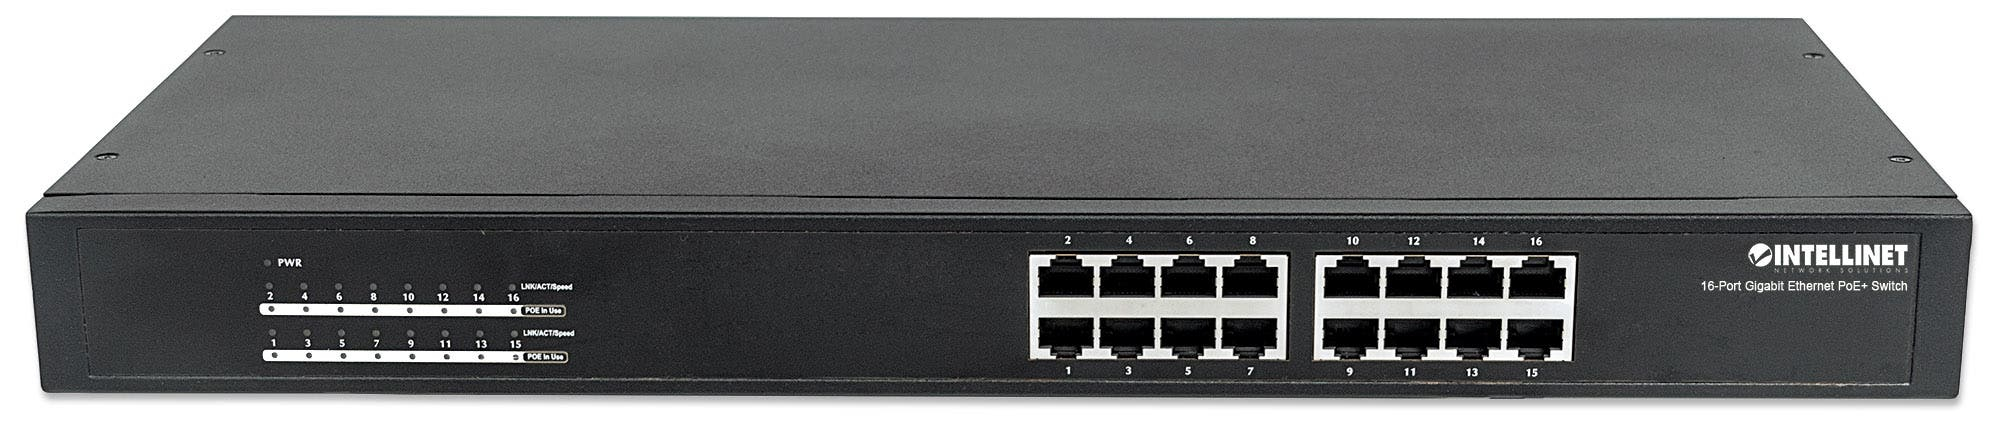 Intellinet 16-Port Gigabit Ethernet PoE+ Switch, 16 x PoE ports, IEEE 802.3at/af Power-over-Ethernet (PoE+/PoE), Endspan, Rackmount (UK 3-pin plug)